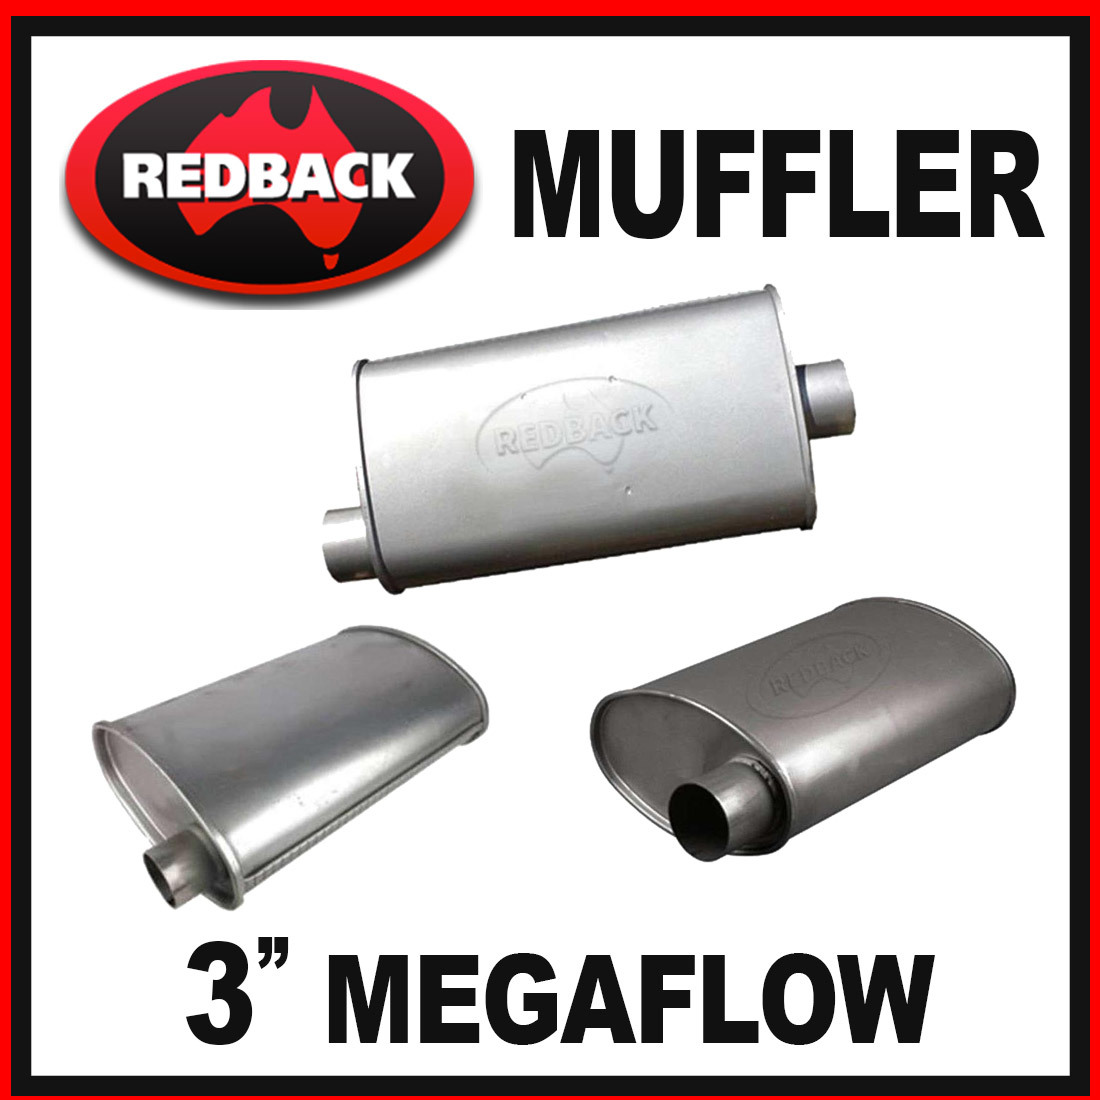 Redback 3" Megaflow Muffler image